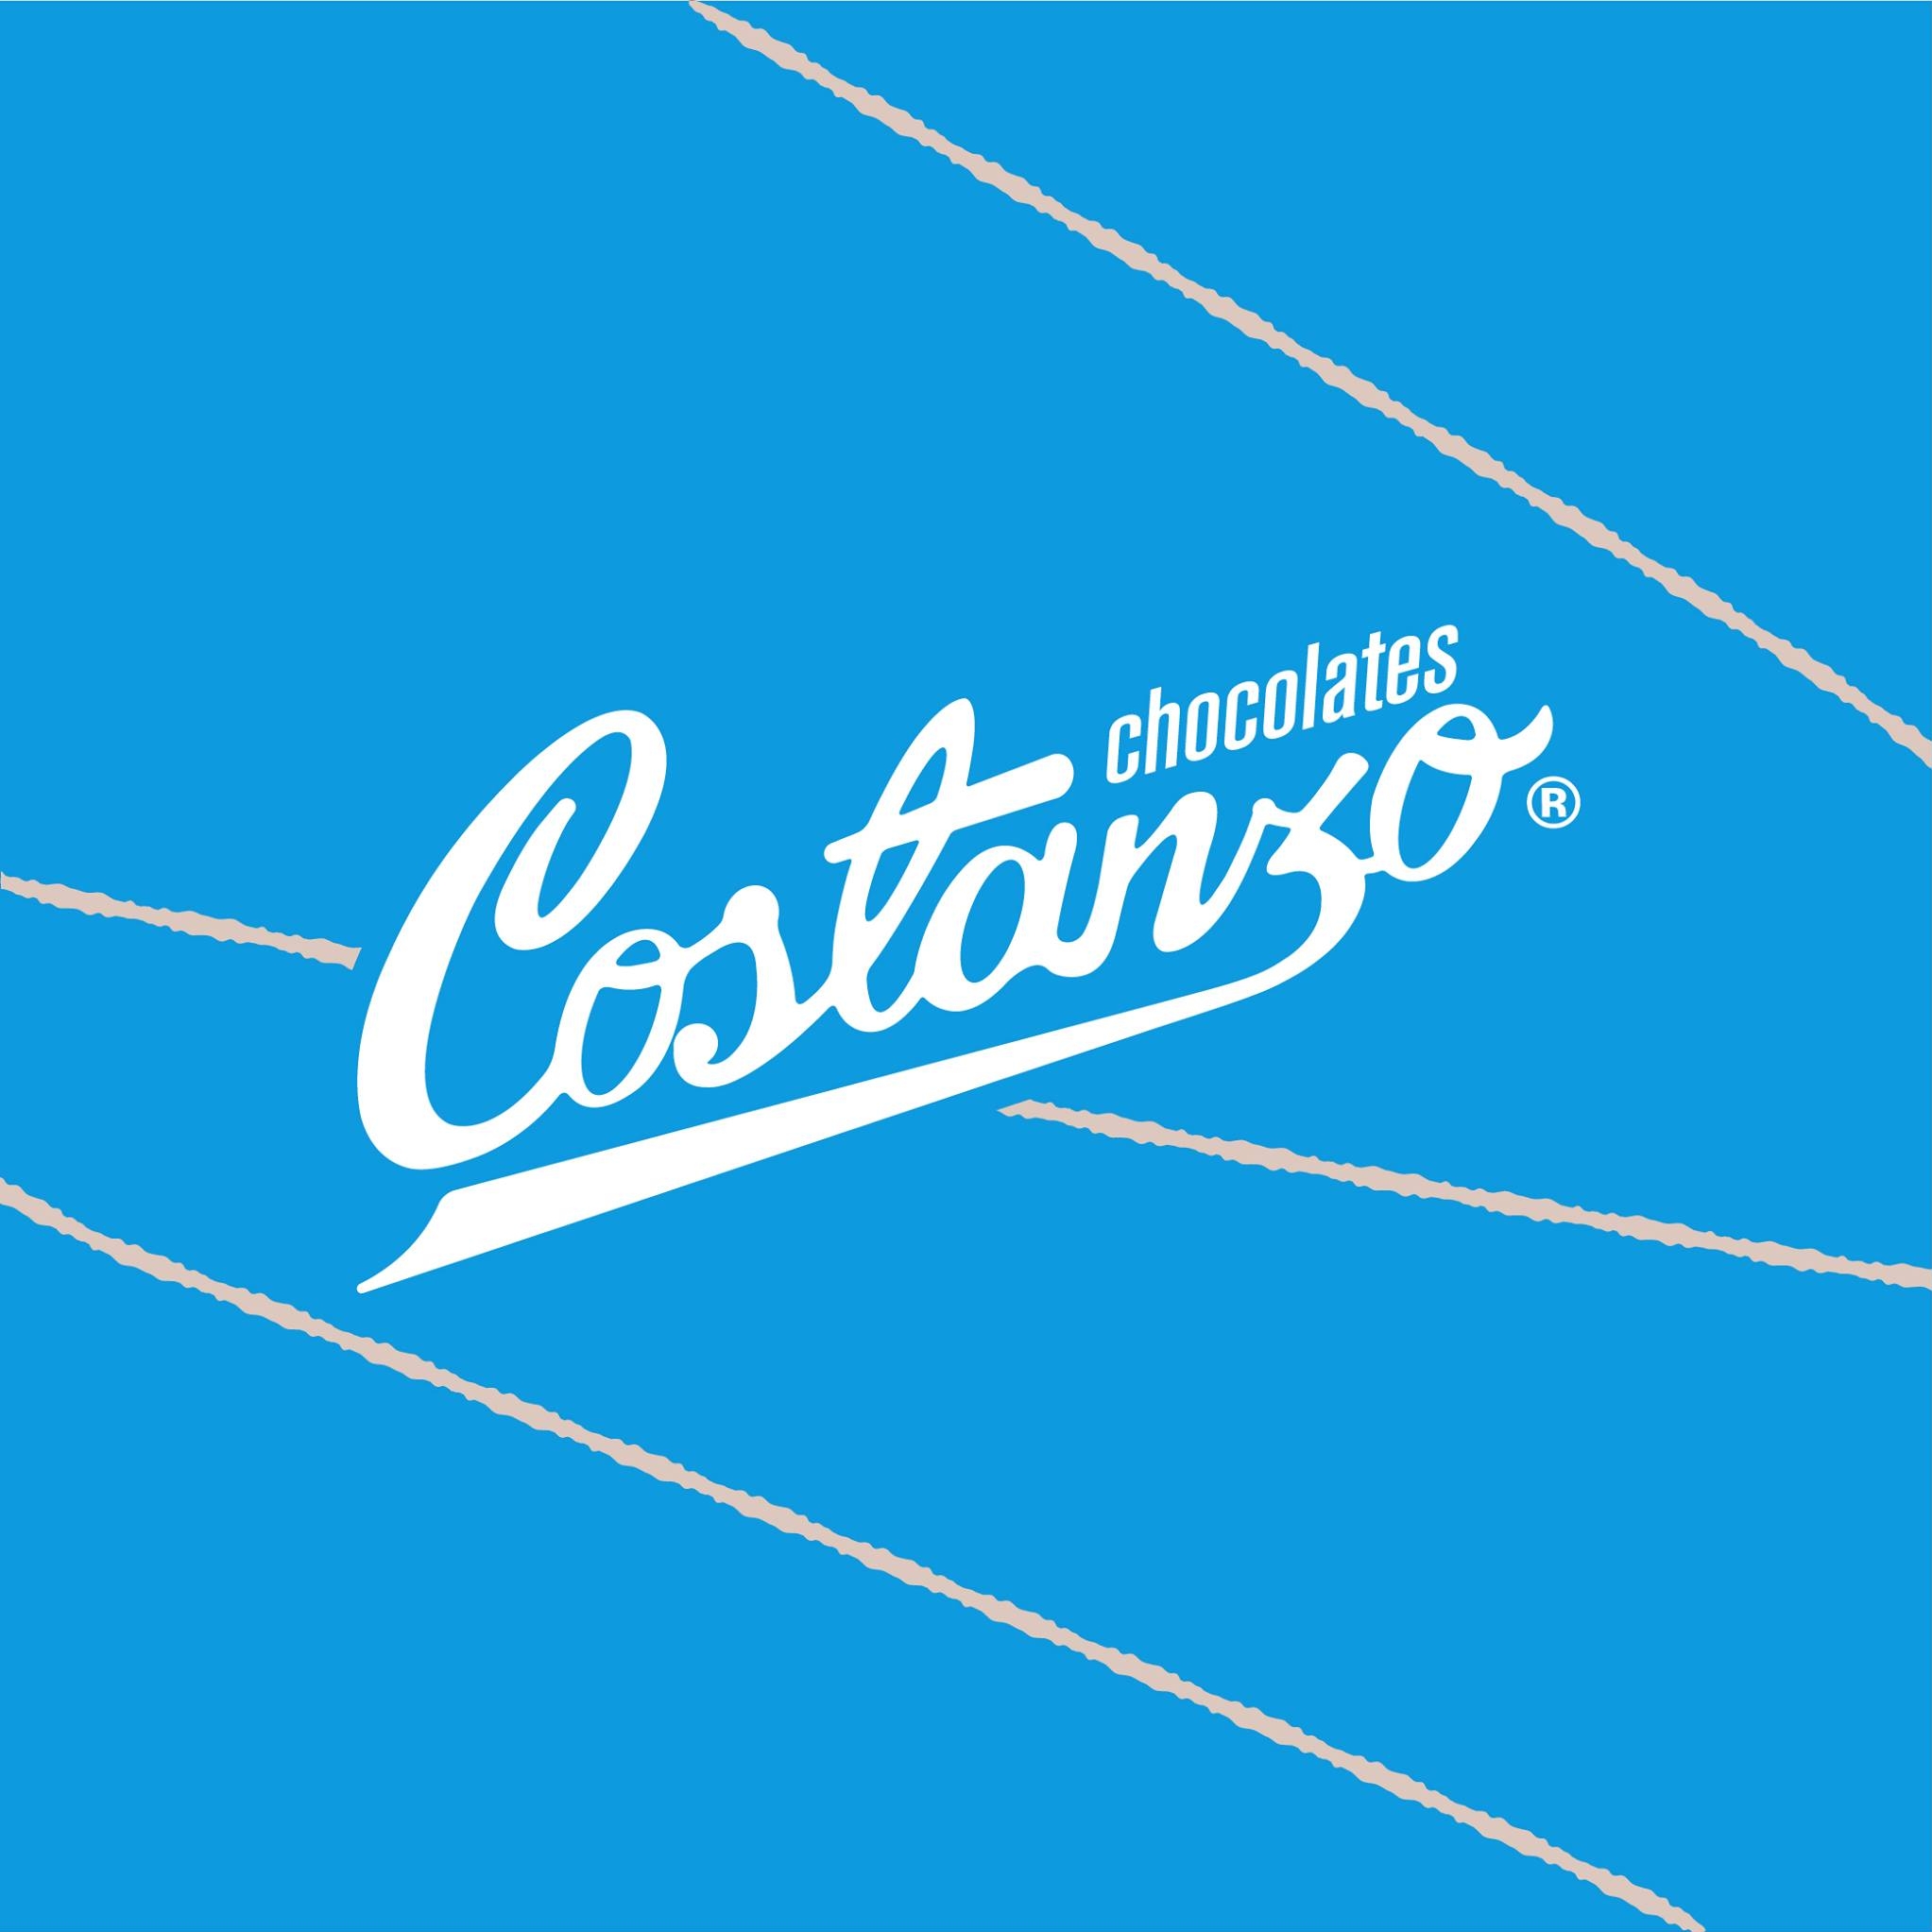 CONSTANZO CHOCOLATES